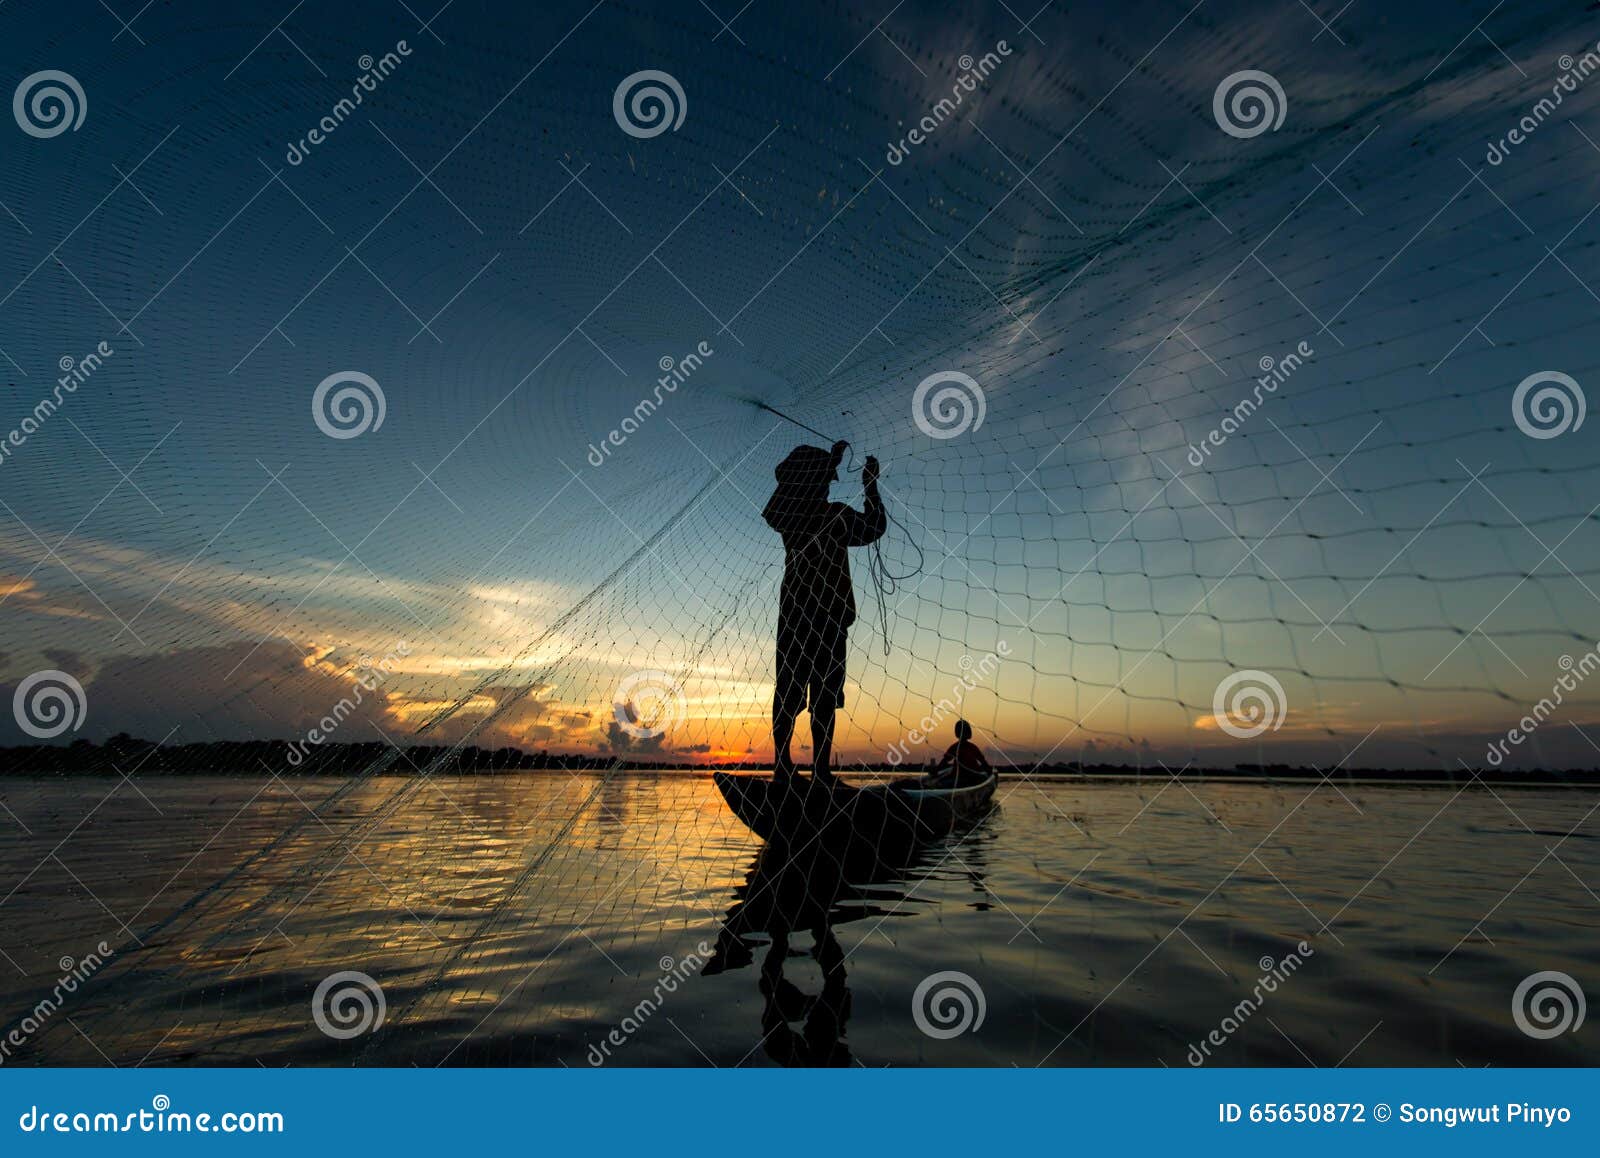 https://thumbs.dreamstime.com/z/fisherman-throwing-net-sunrise-thailand-countryside-65650872.jpg